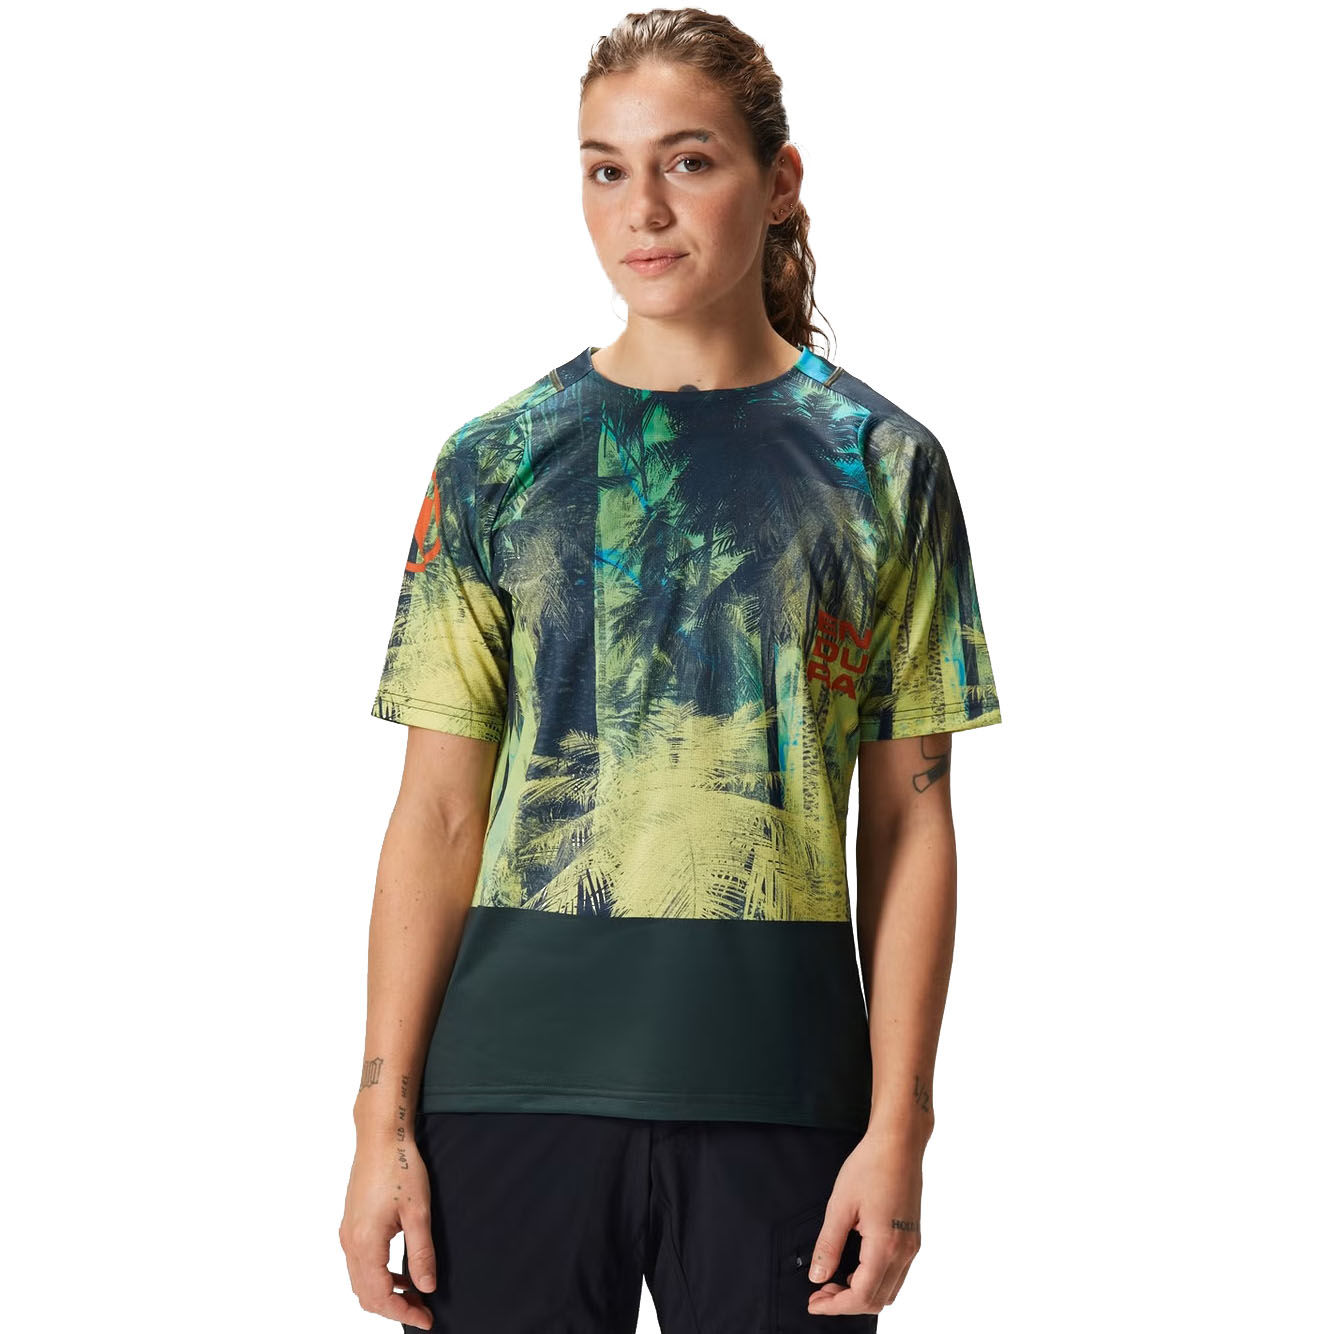 Productfoto van Endura Tropical LTD T-Shirt Dames - camouflage